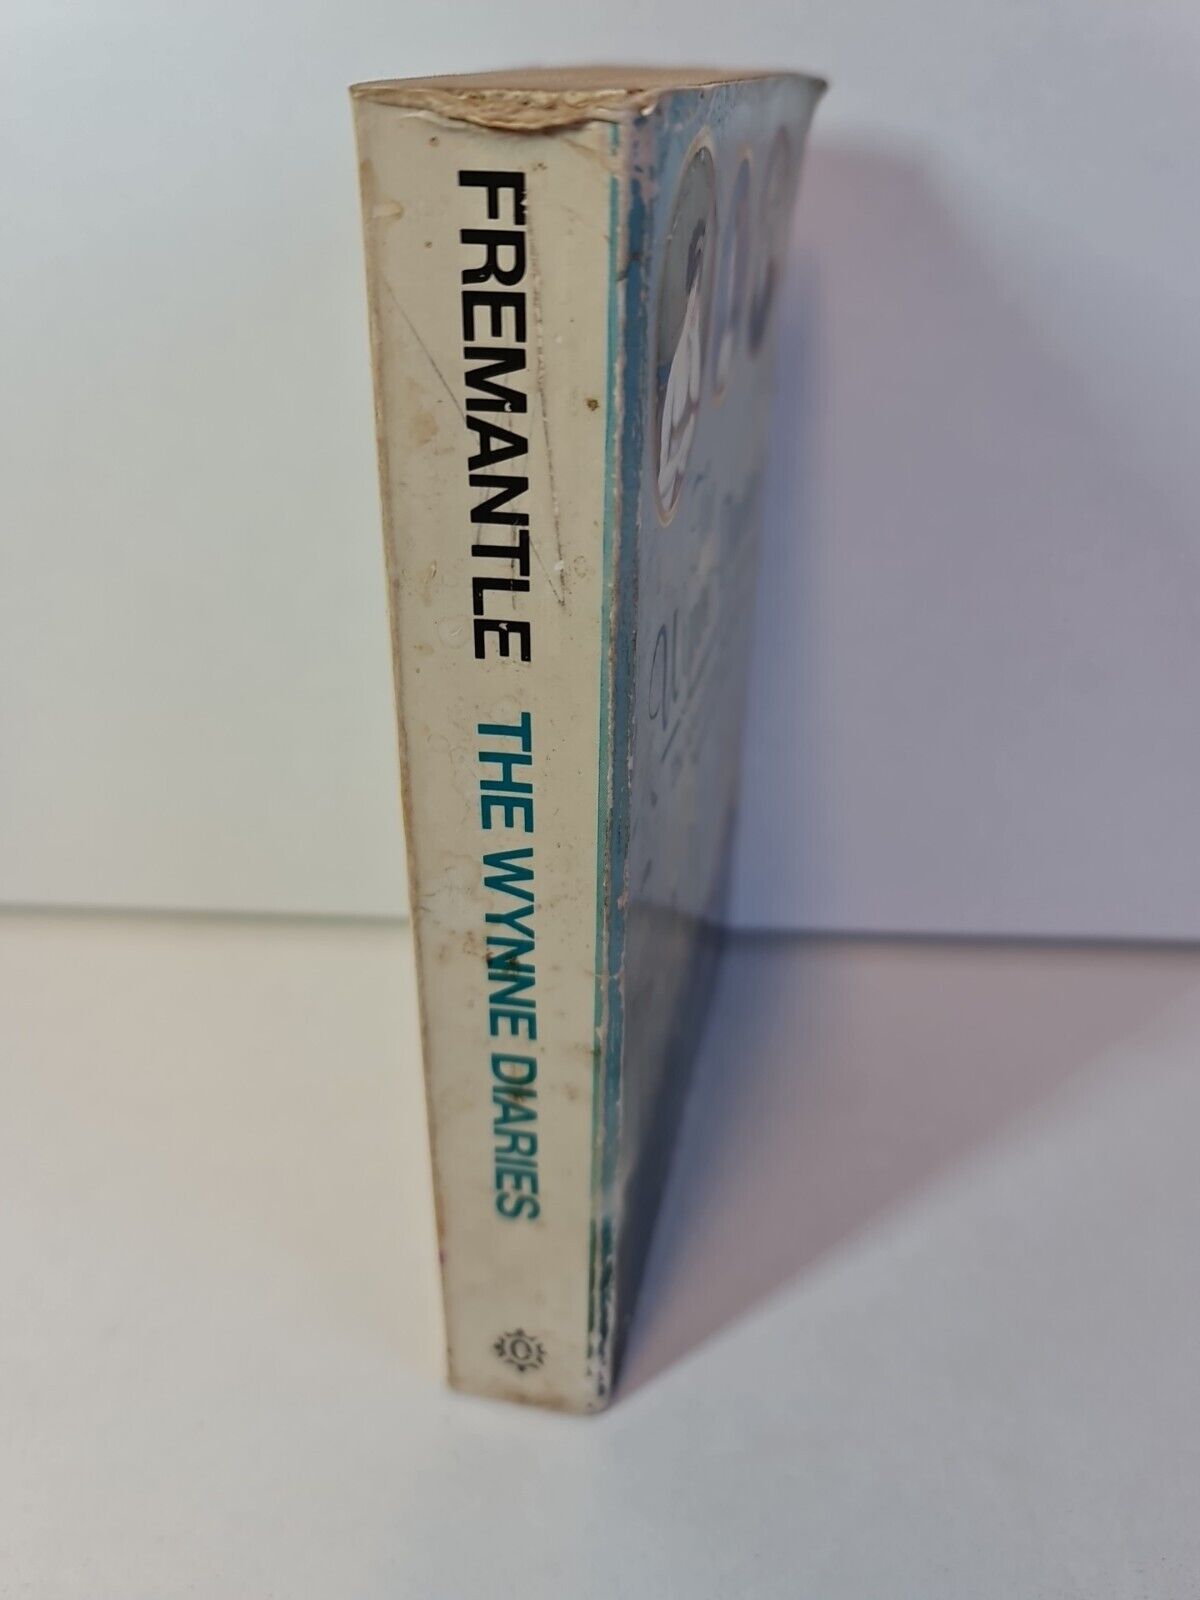 The Wynne Diaries eds. Anne Fremantle ( 1982)